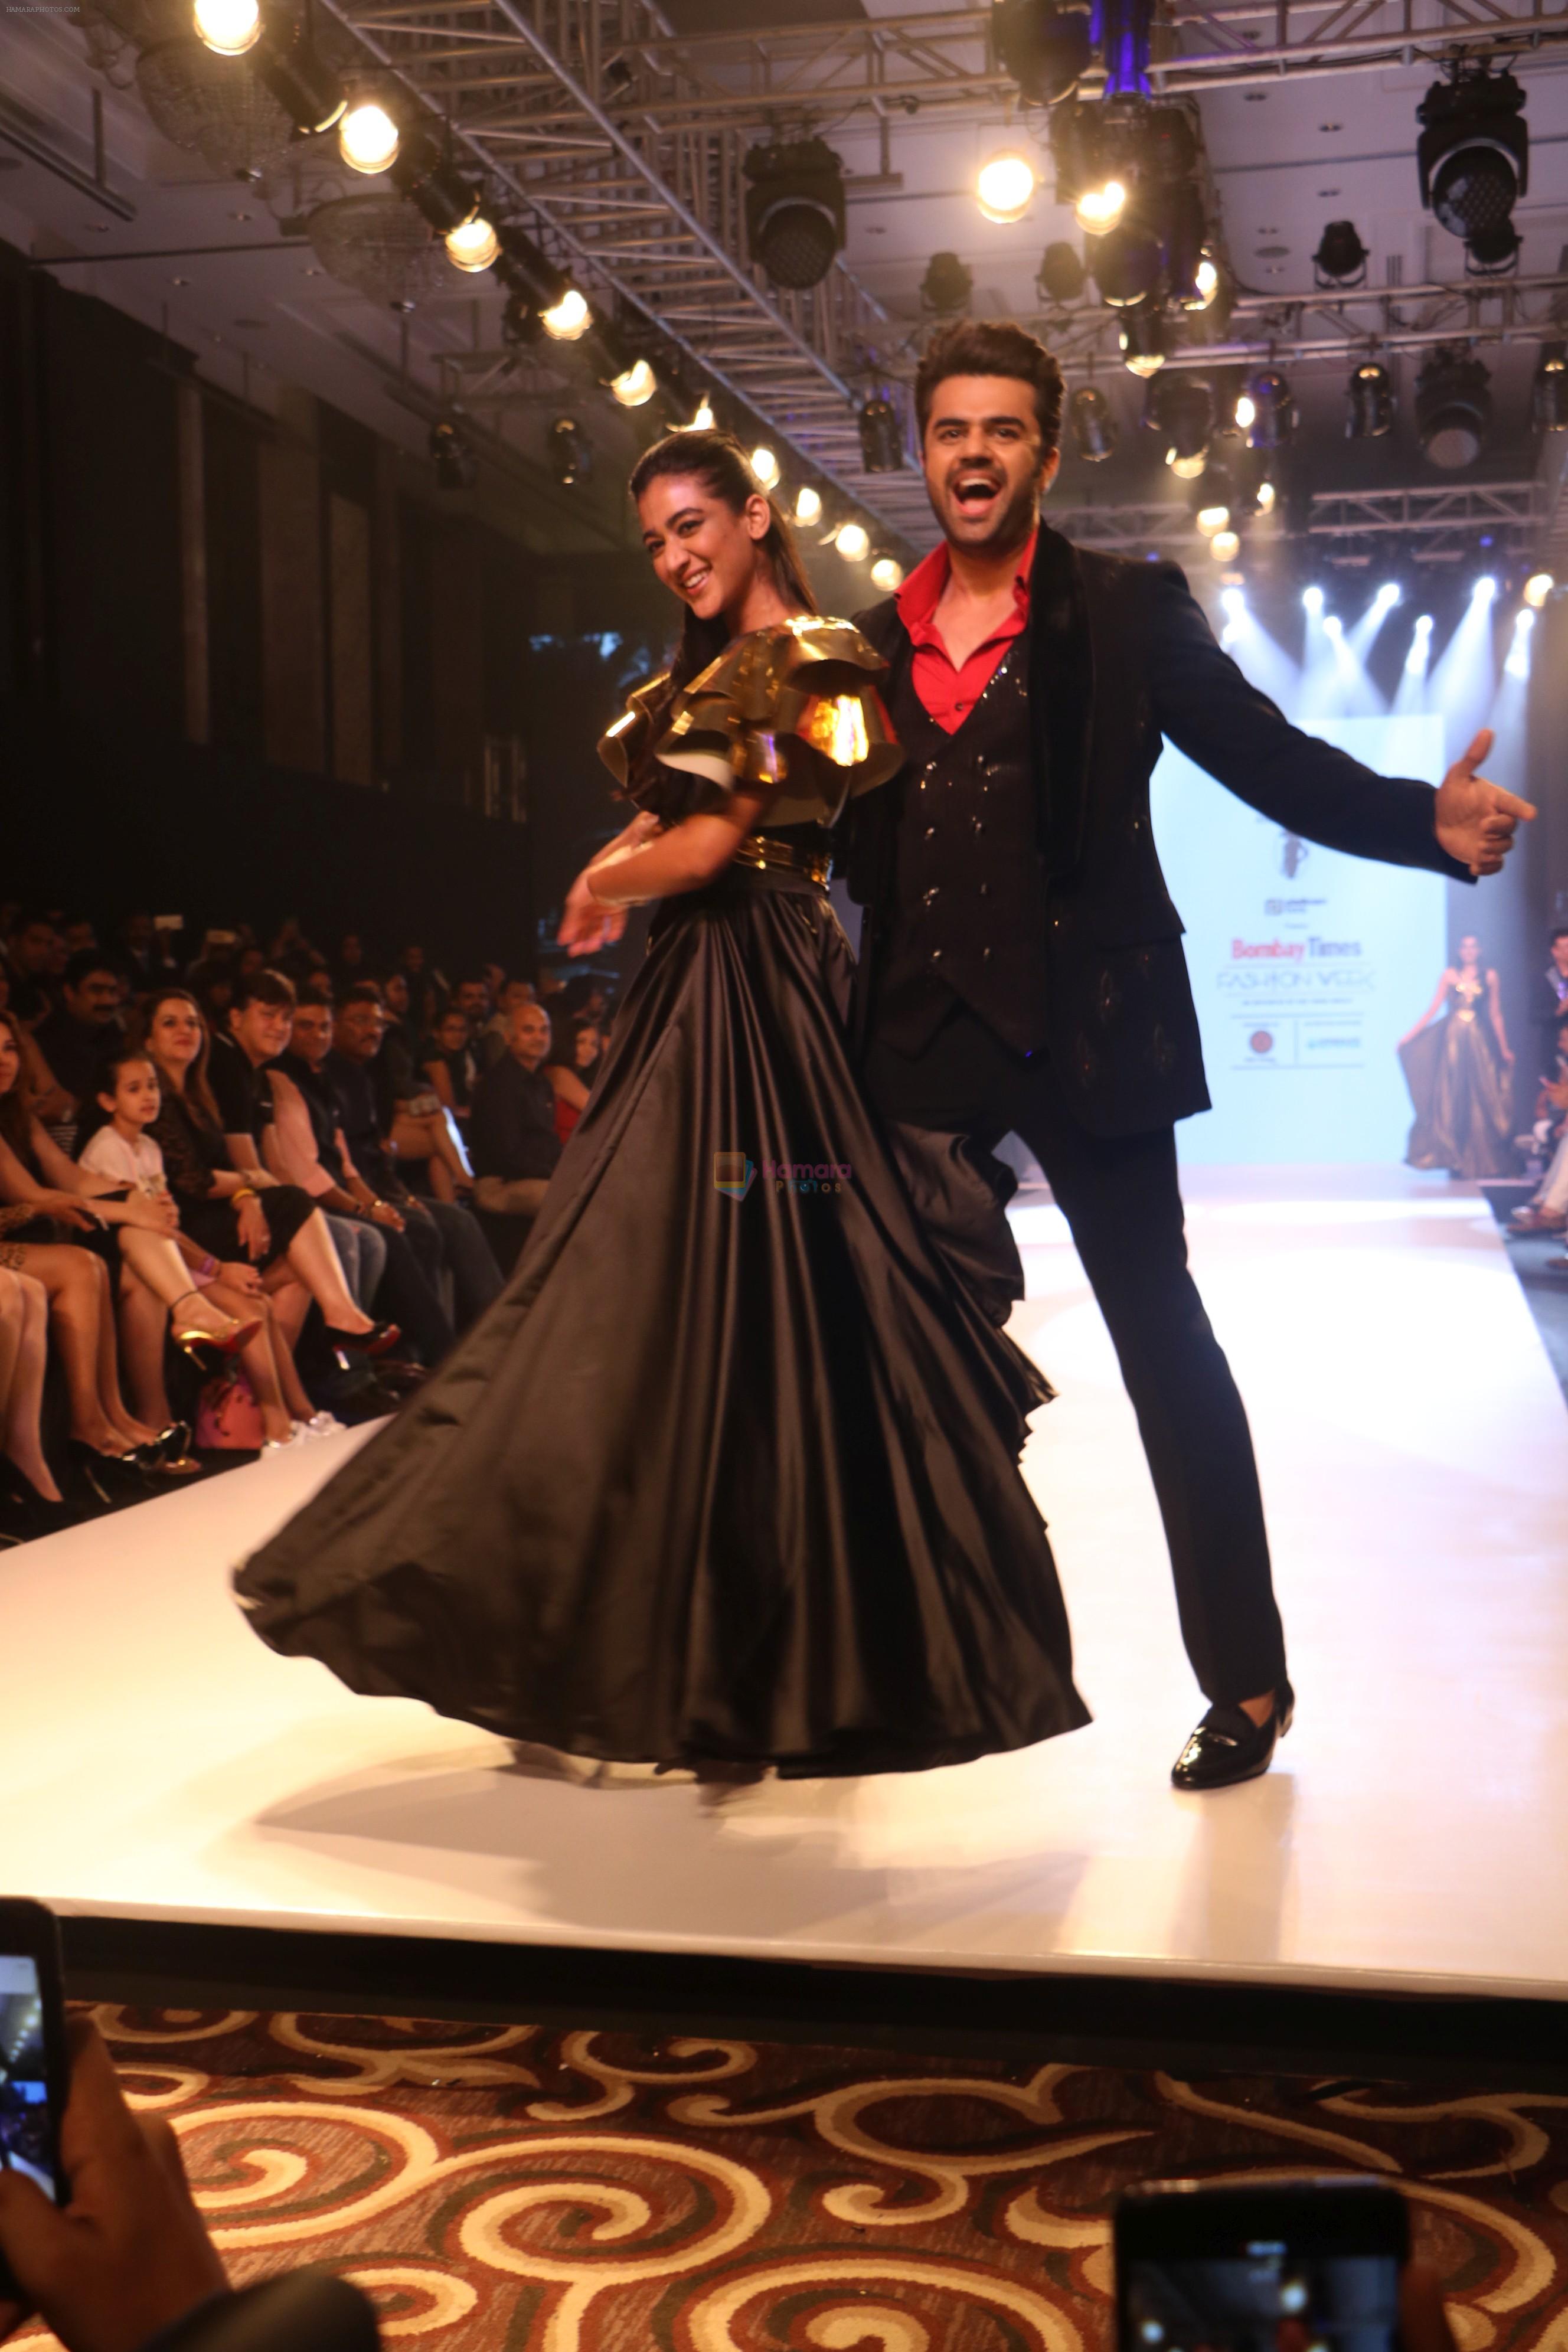 Manish Paul at BT Fashion Week in Mumbai on 12th Oct 2018